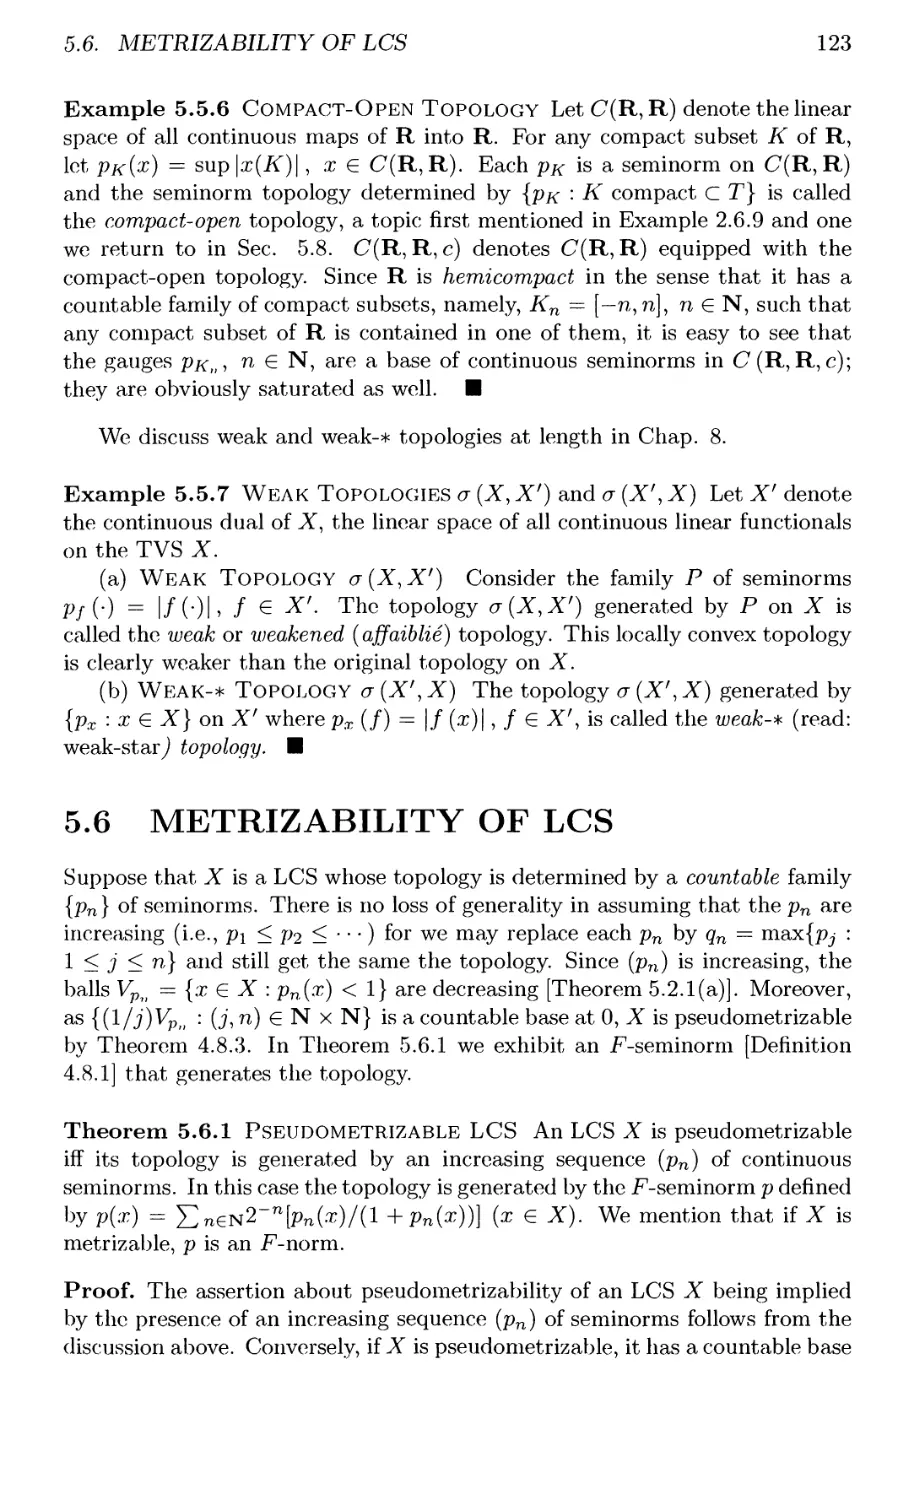 5.6 METRIZABILITY OF LCS